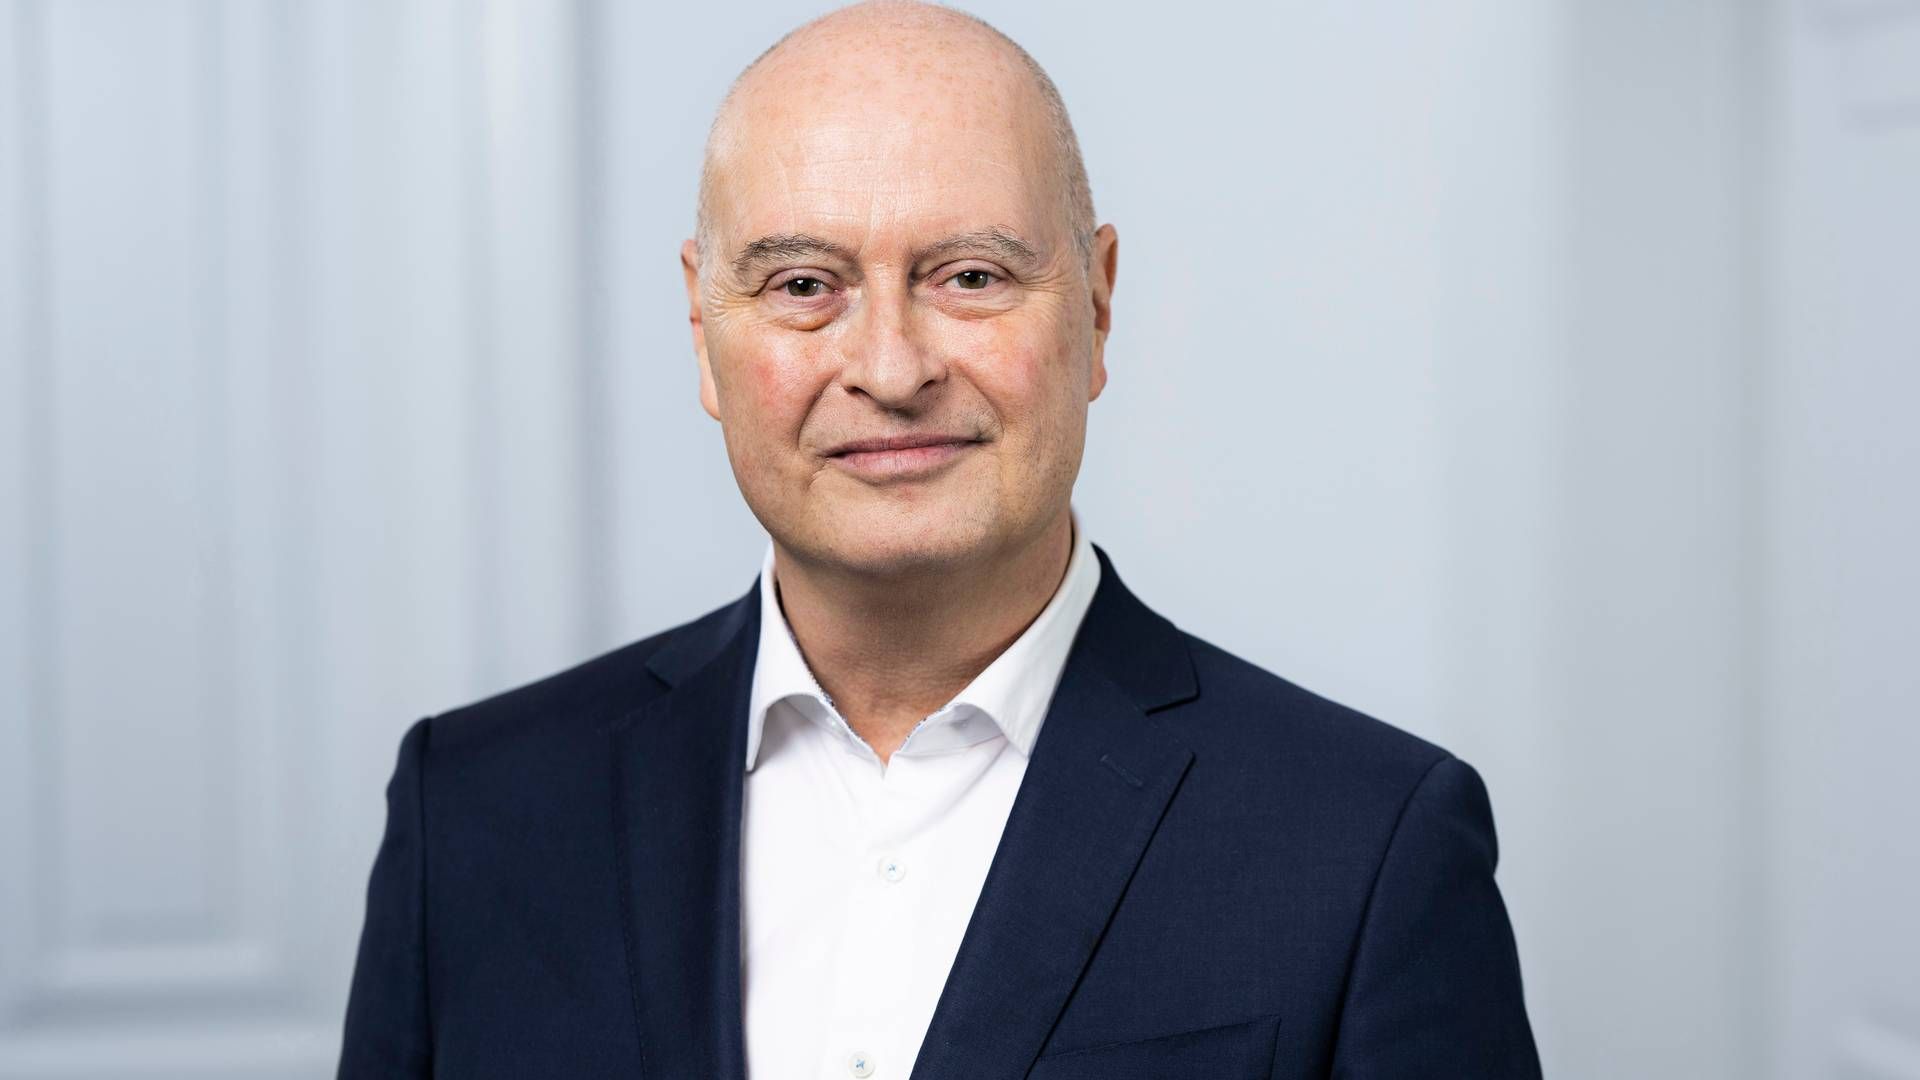 Allan Luplau er adm. direktør i Sygeforsikringen "danmark". | Foto: Pr